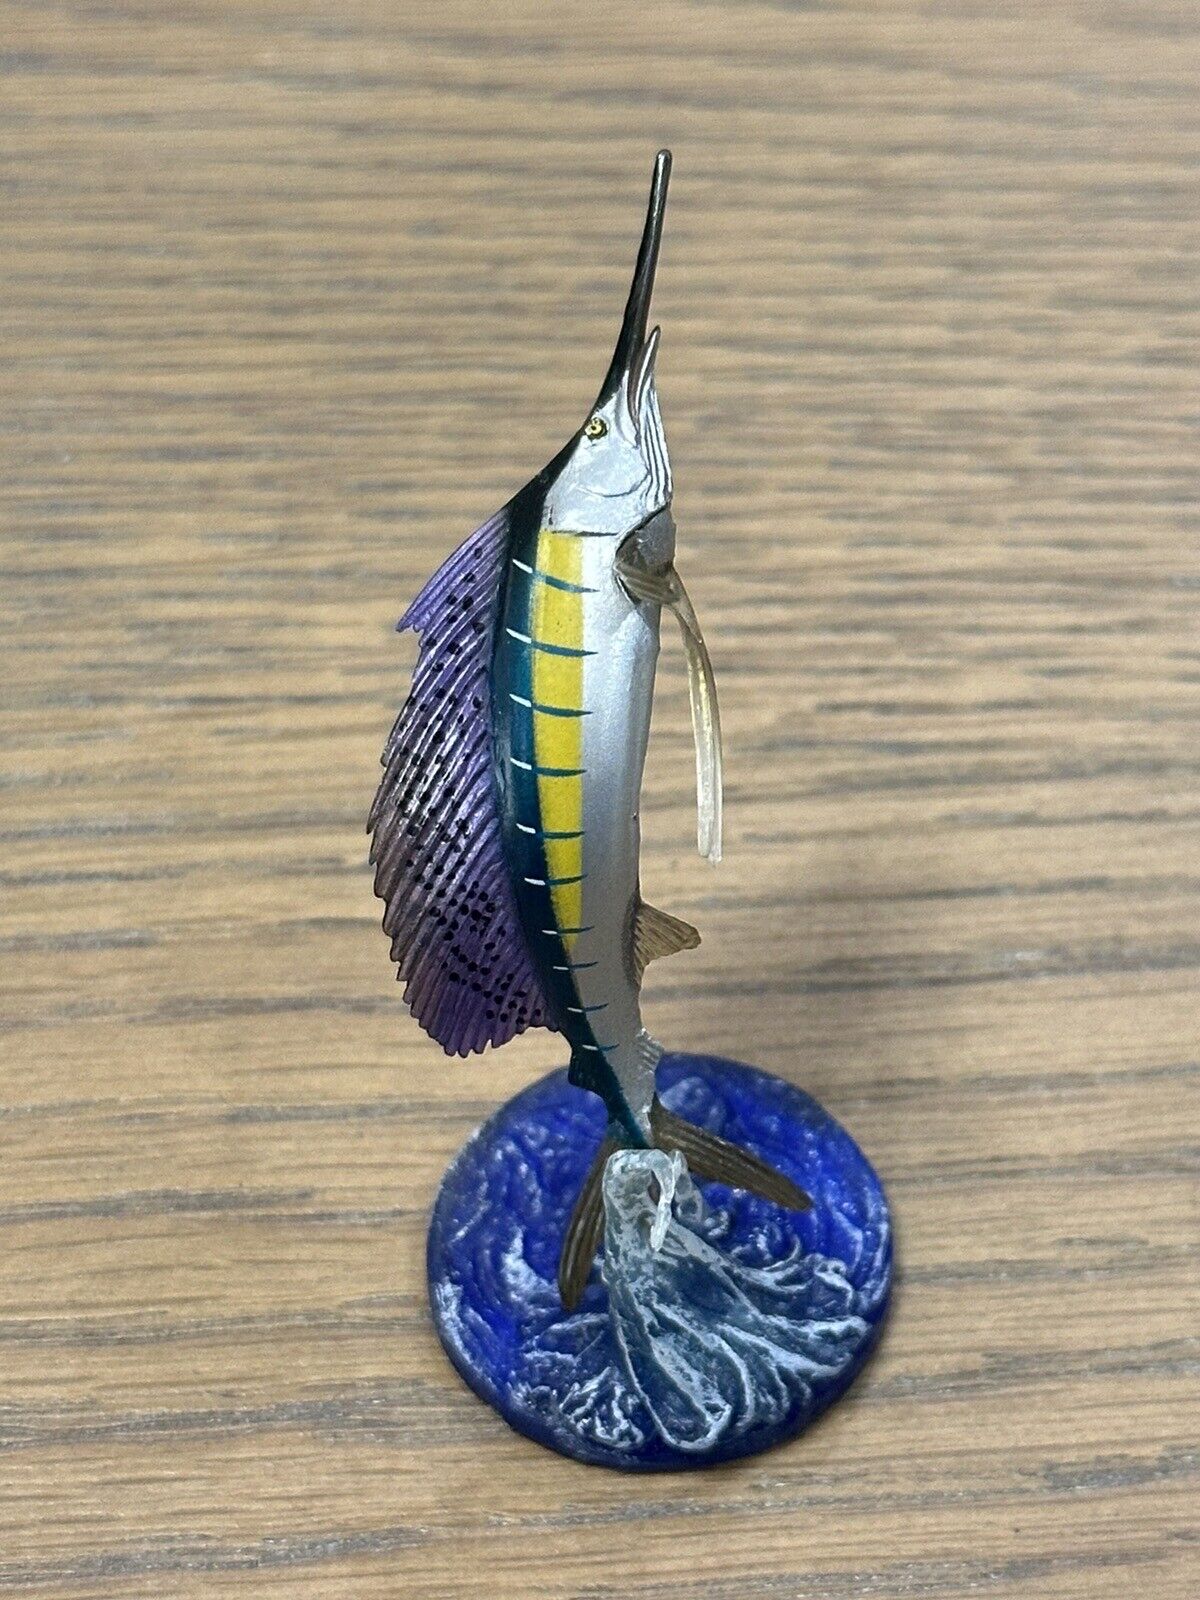 Kaiyodo Glico Aquatales Sailfish Swordfish Fish Japan Exclusive Figure Model